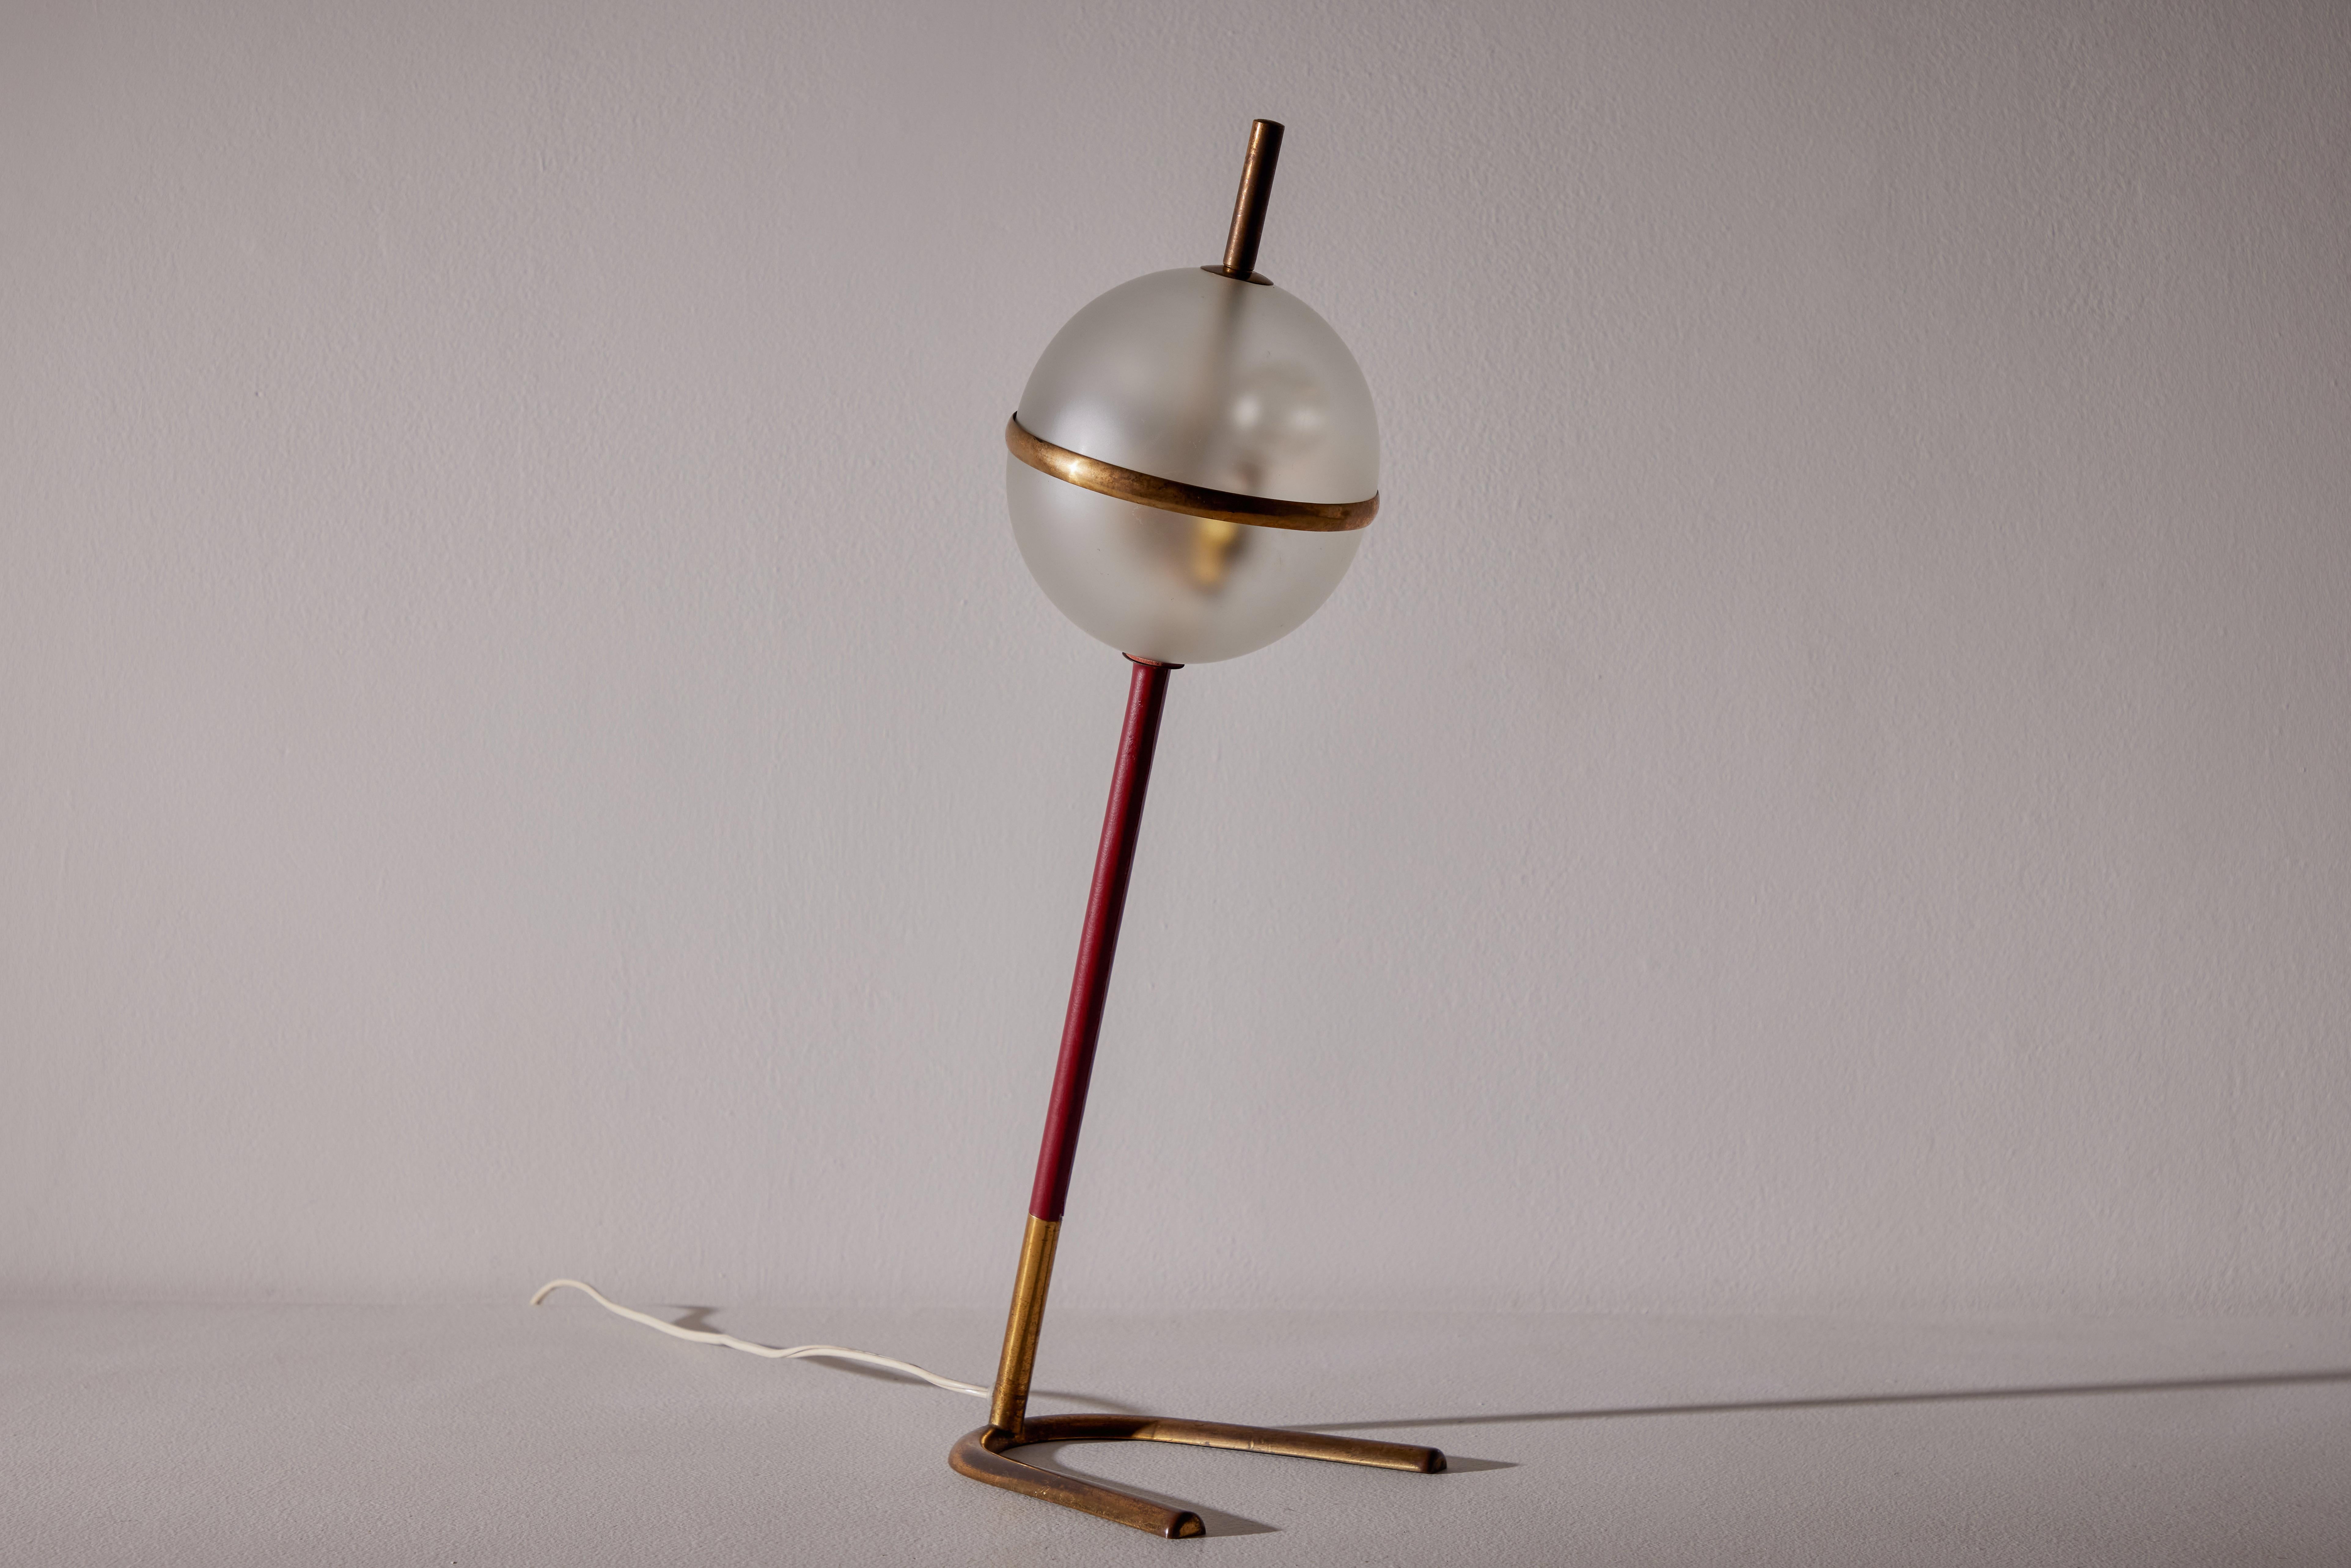 Brass Table Lamp by Arredoluce